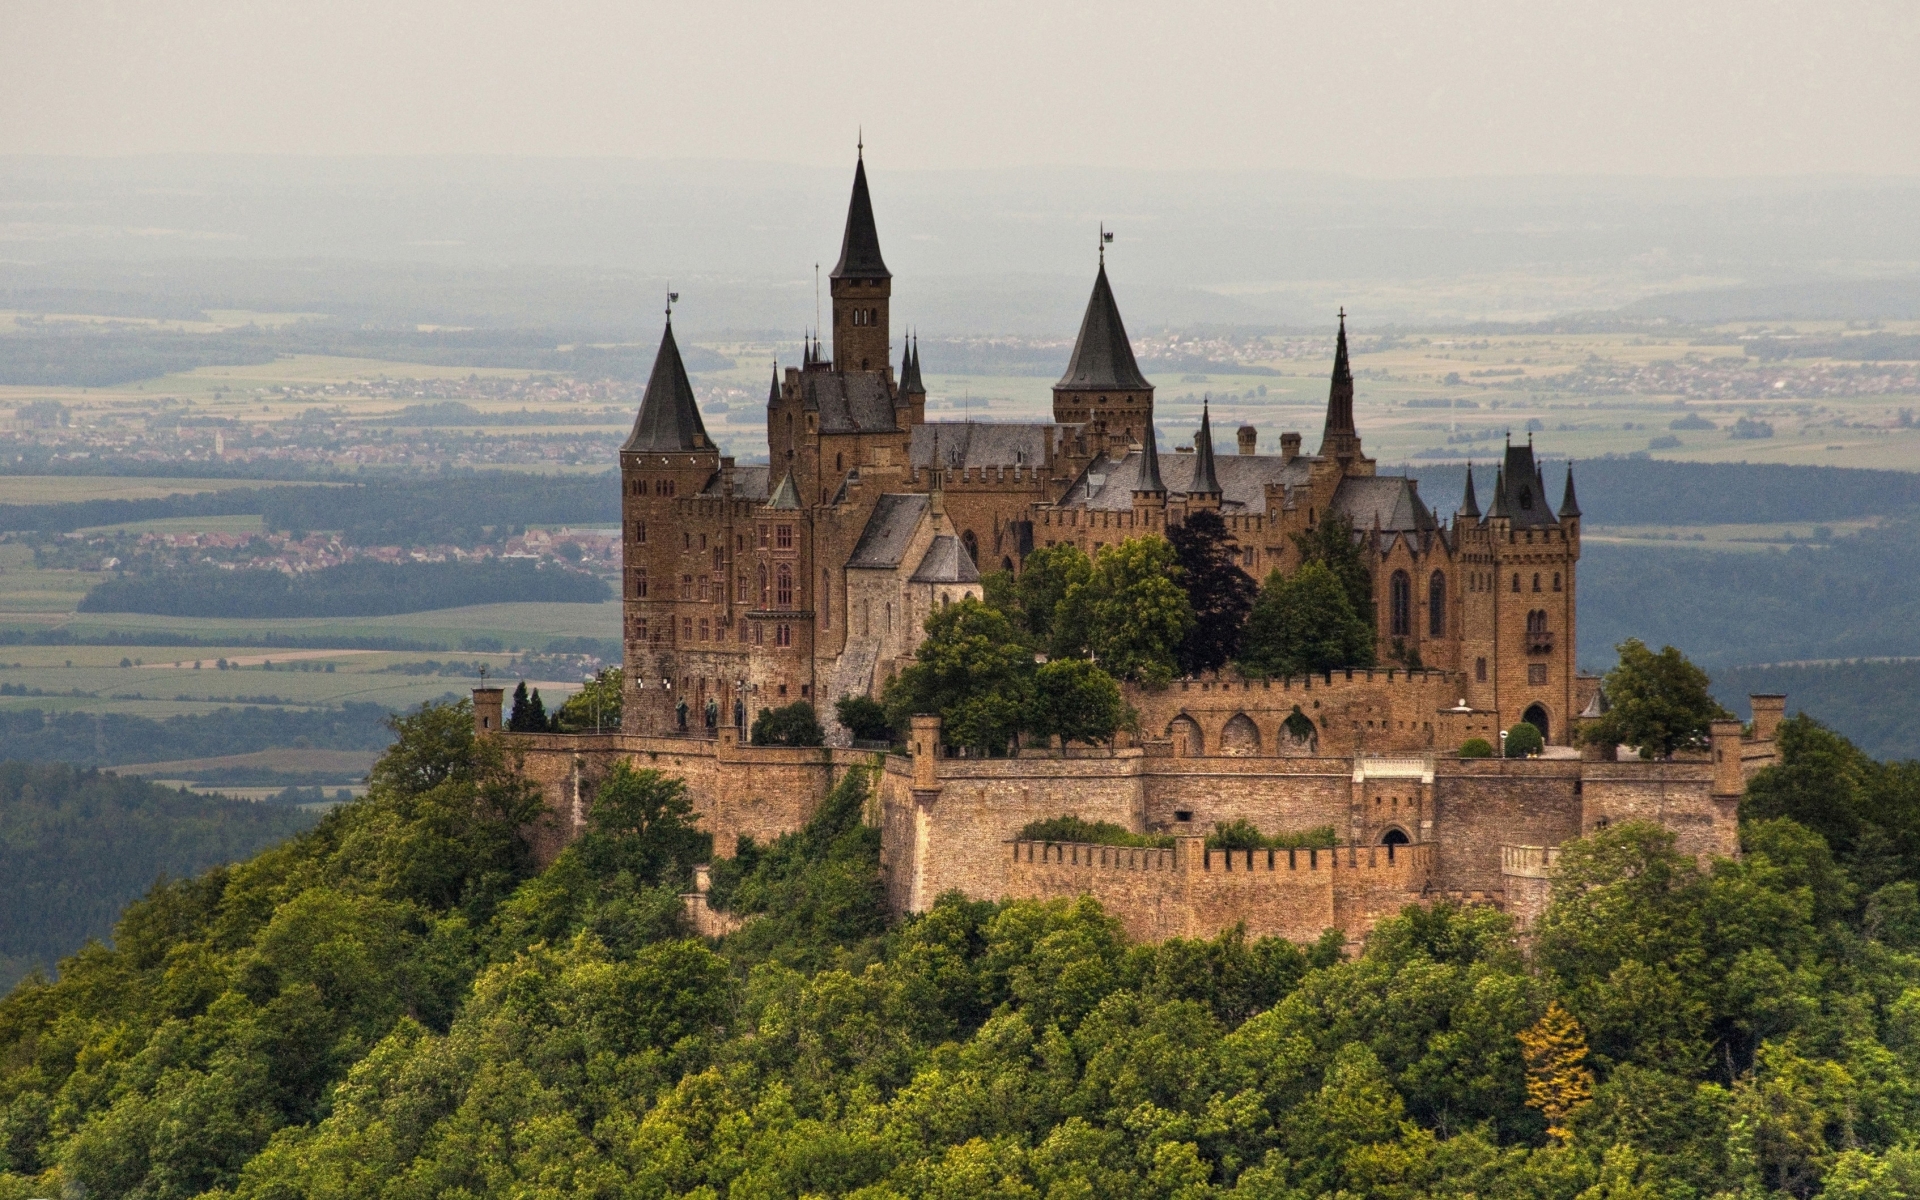 Hohenzollern Castle Wallpaper